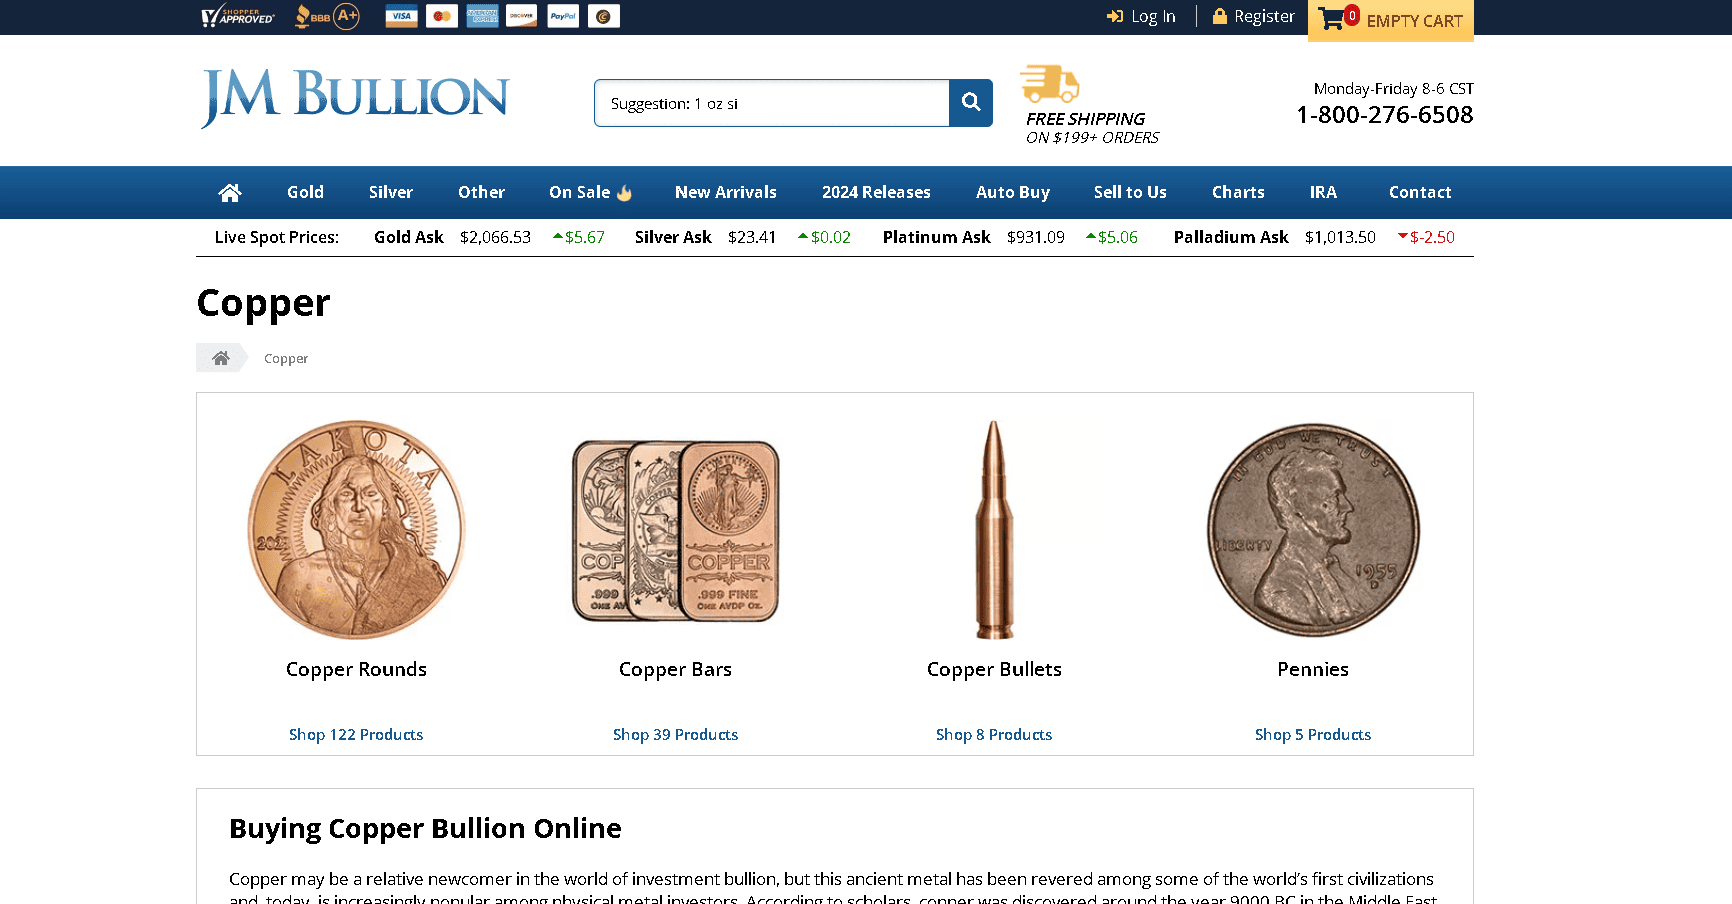 JM Bullion sell copper coins, bars and bullets